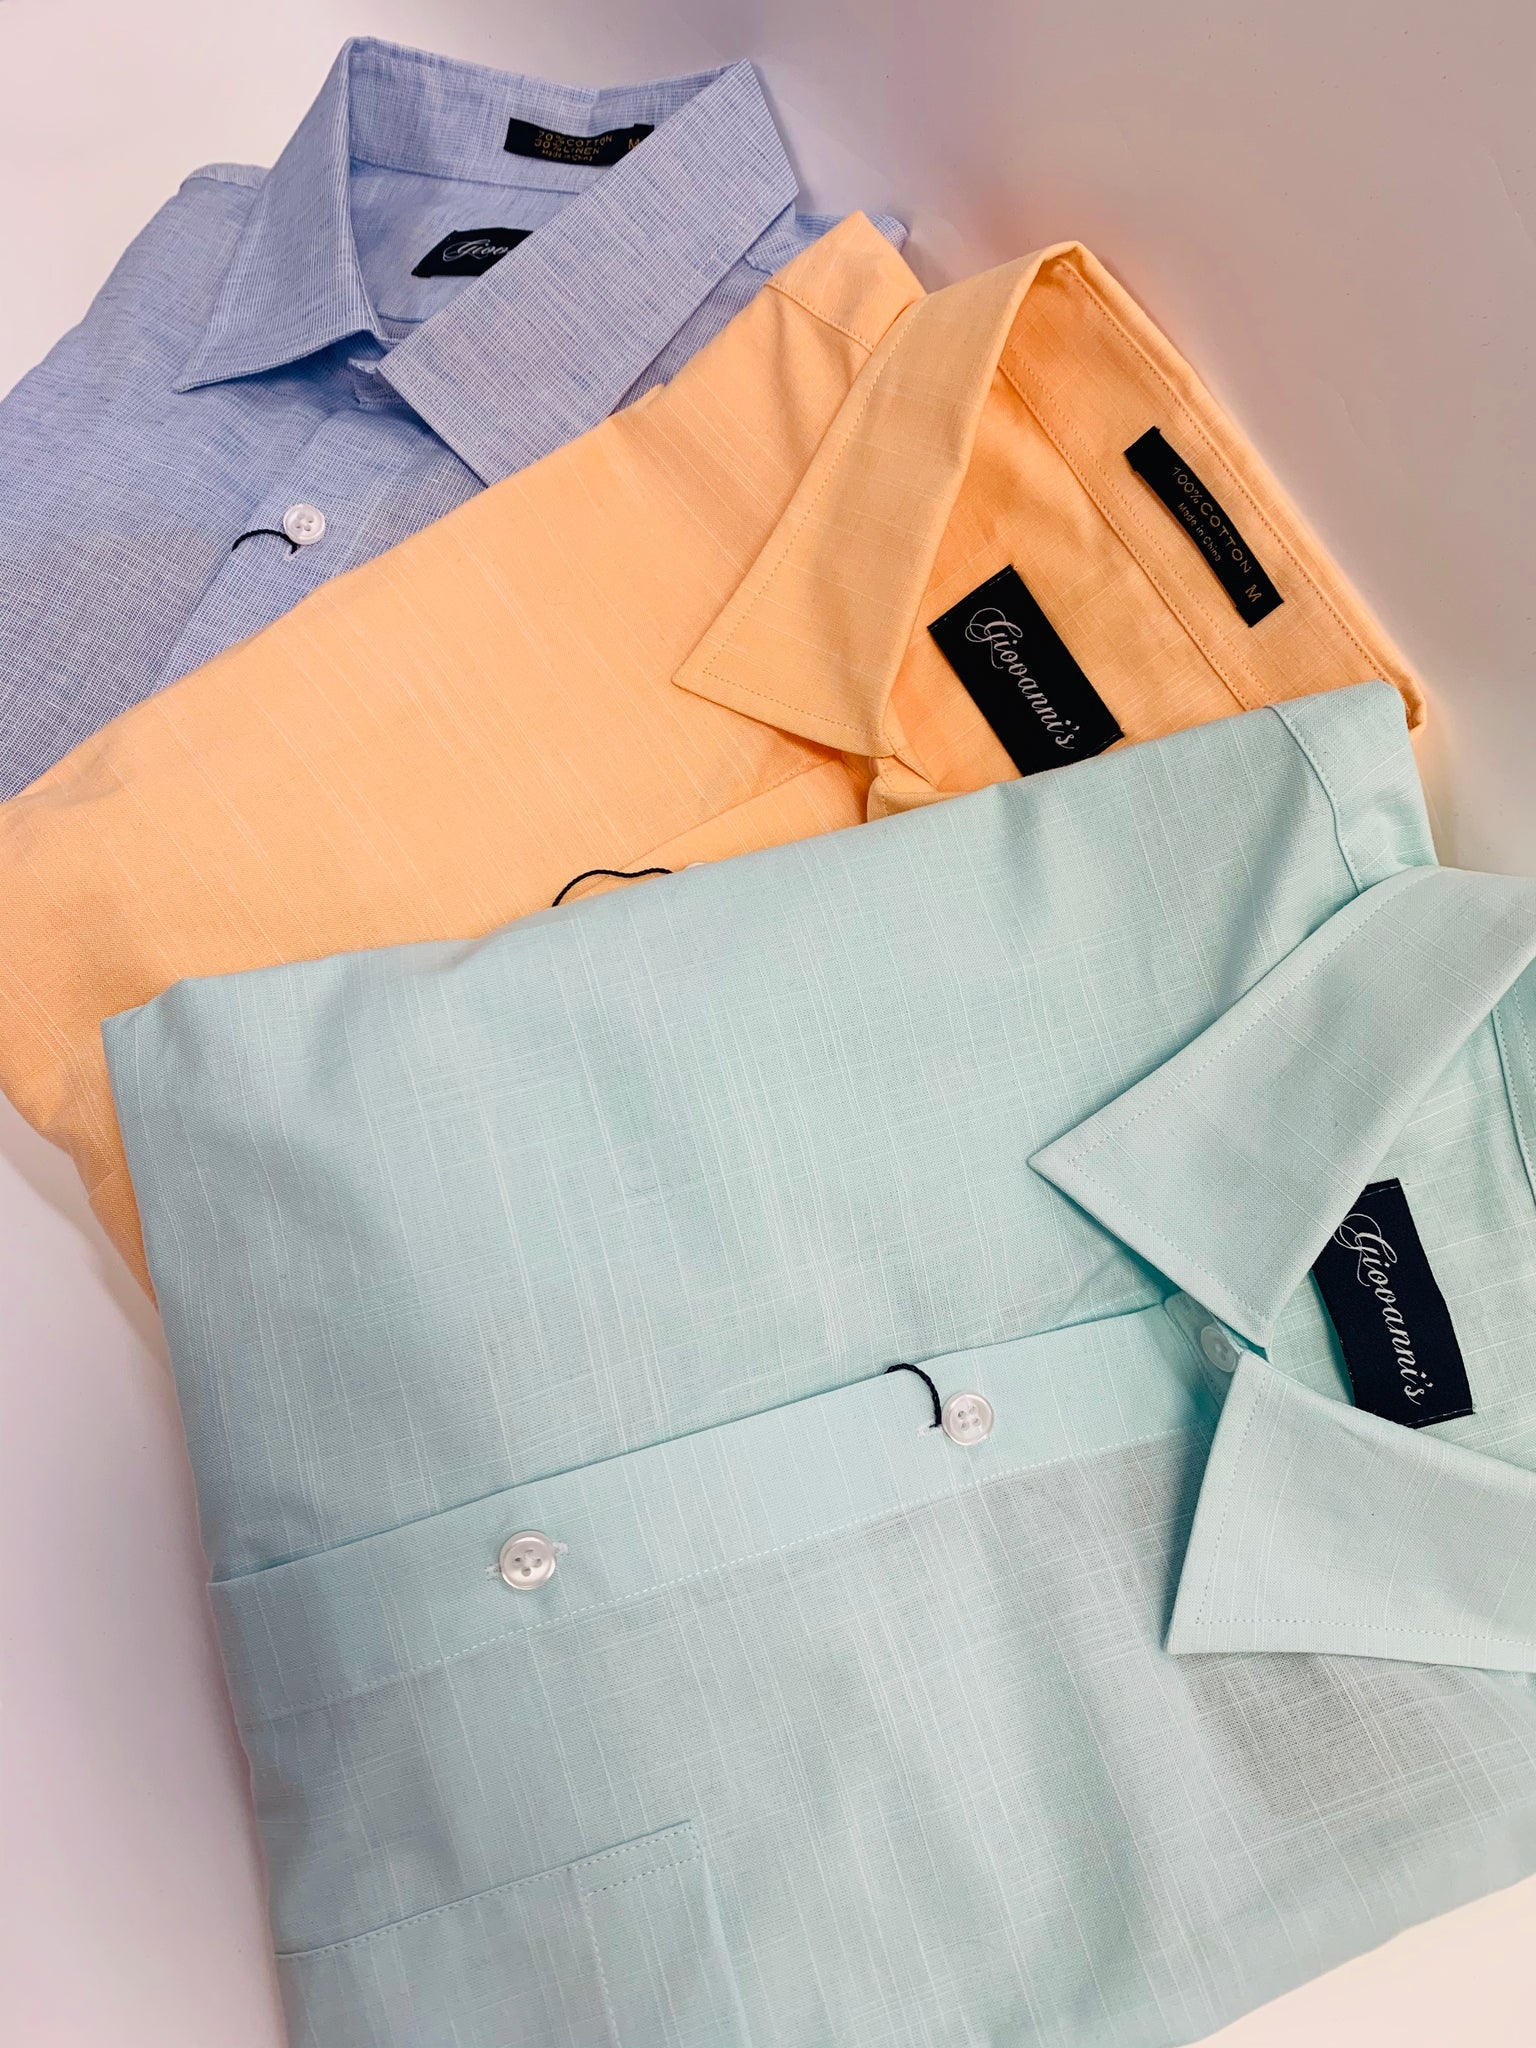 Giovanni’s Cotton/Linen Short Sleeve Button Down Shirt WSS2220